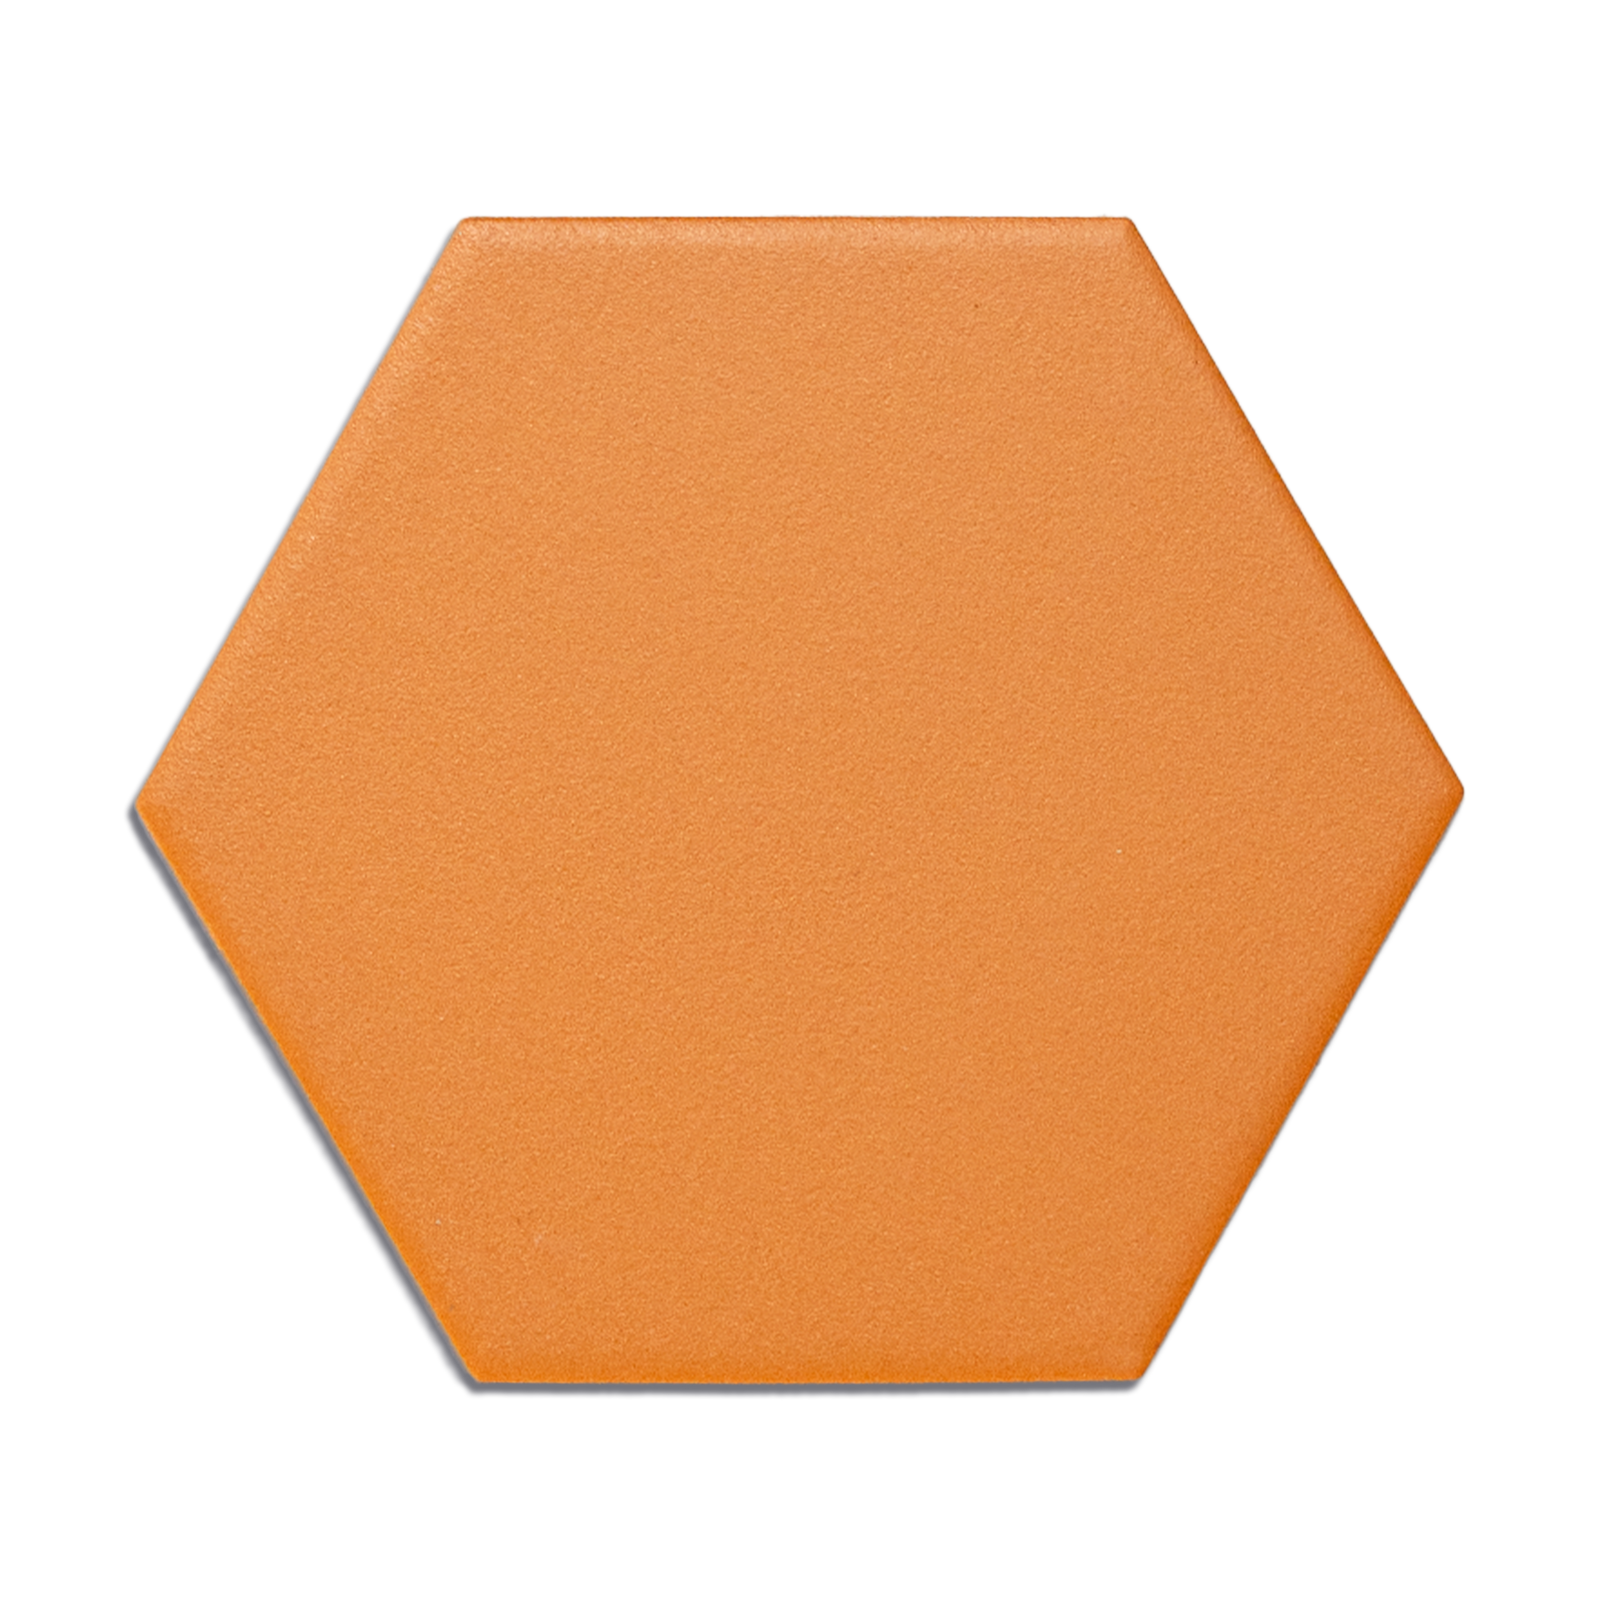 Trucco Hexagon Apricot 4.25x5 Full Body Porcelain Tile